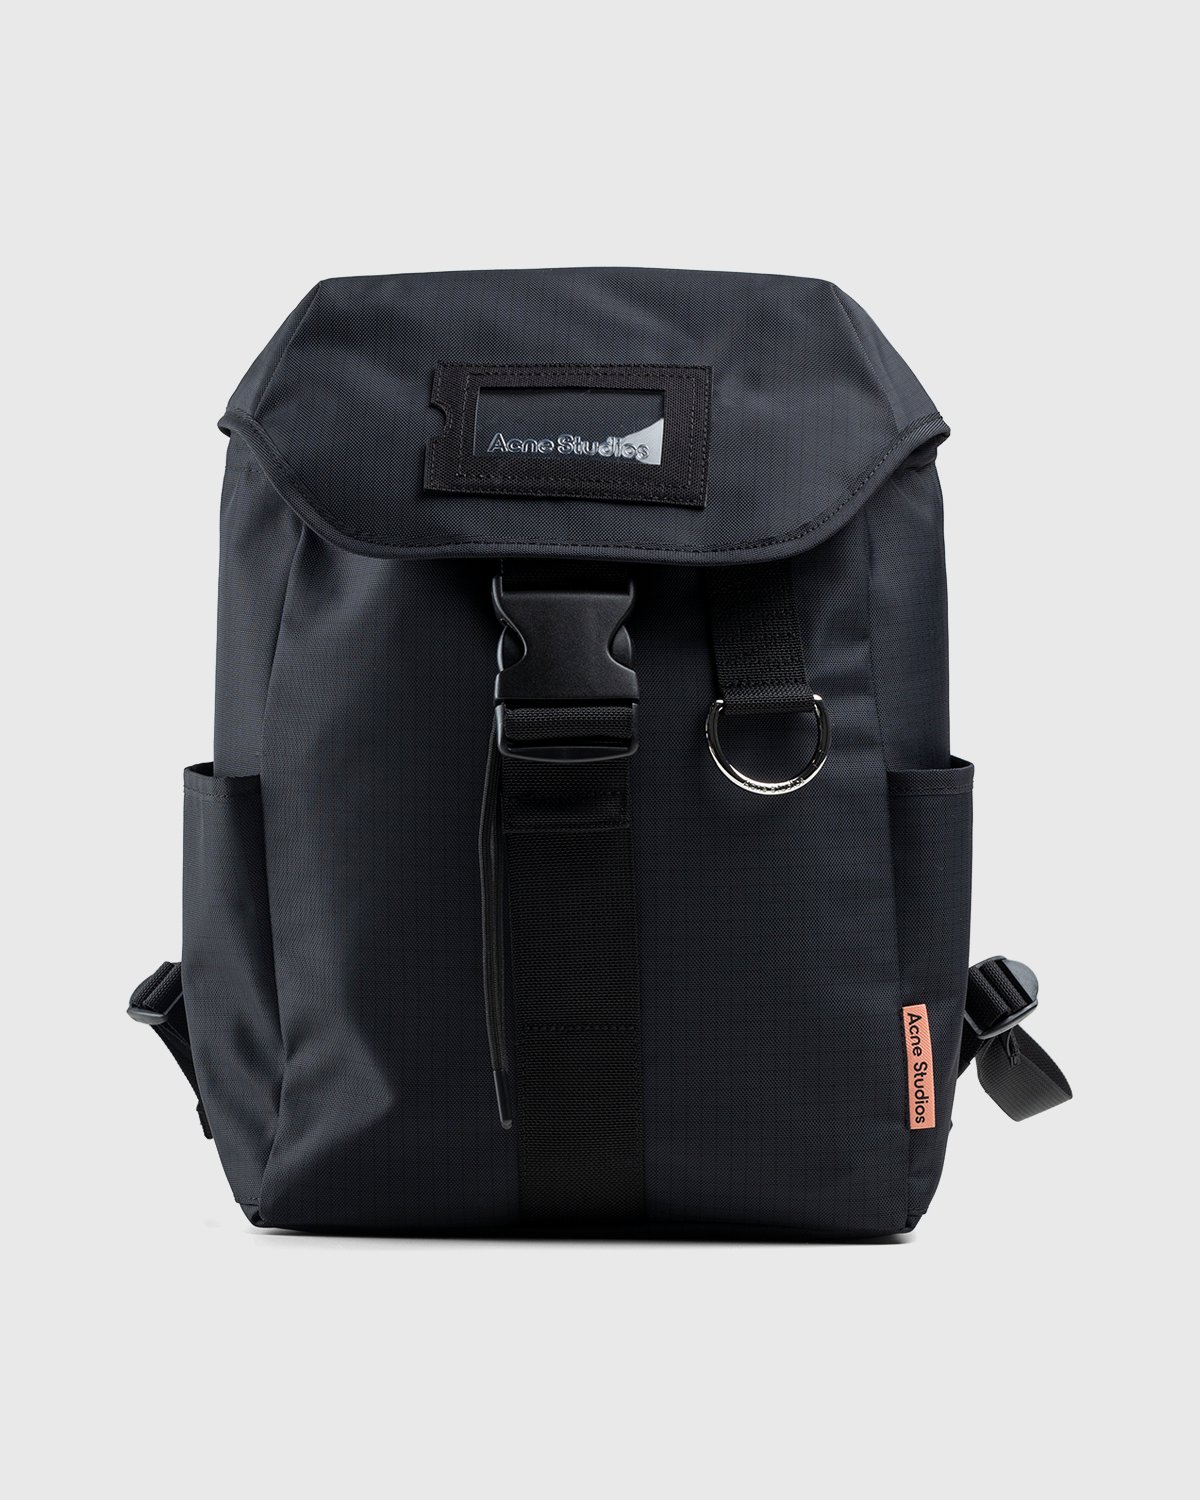 Acne Studios - Large Ripstop Backpack Black - Accessories - Black - Image 1